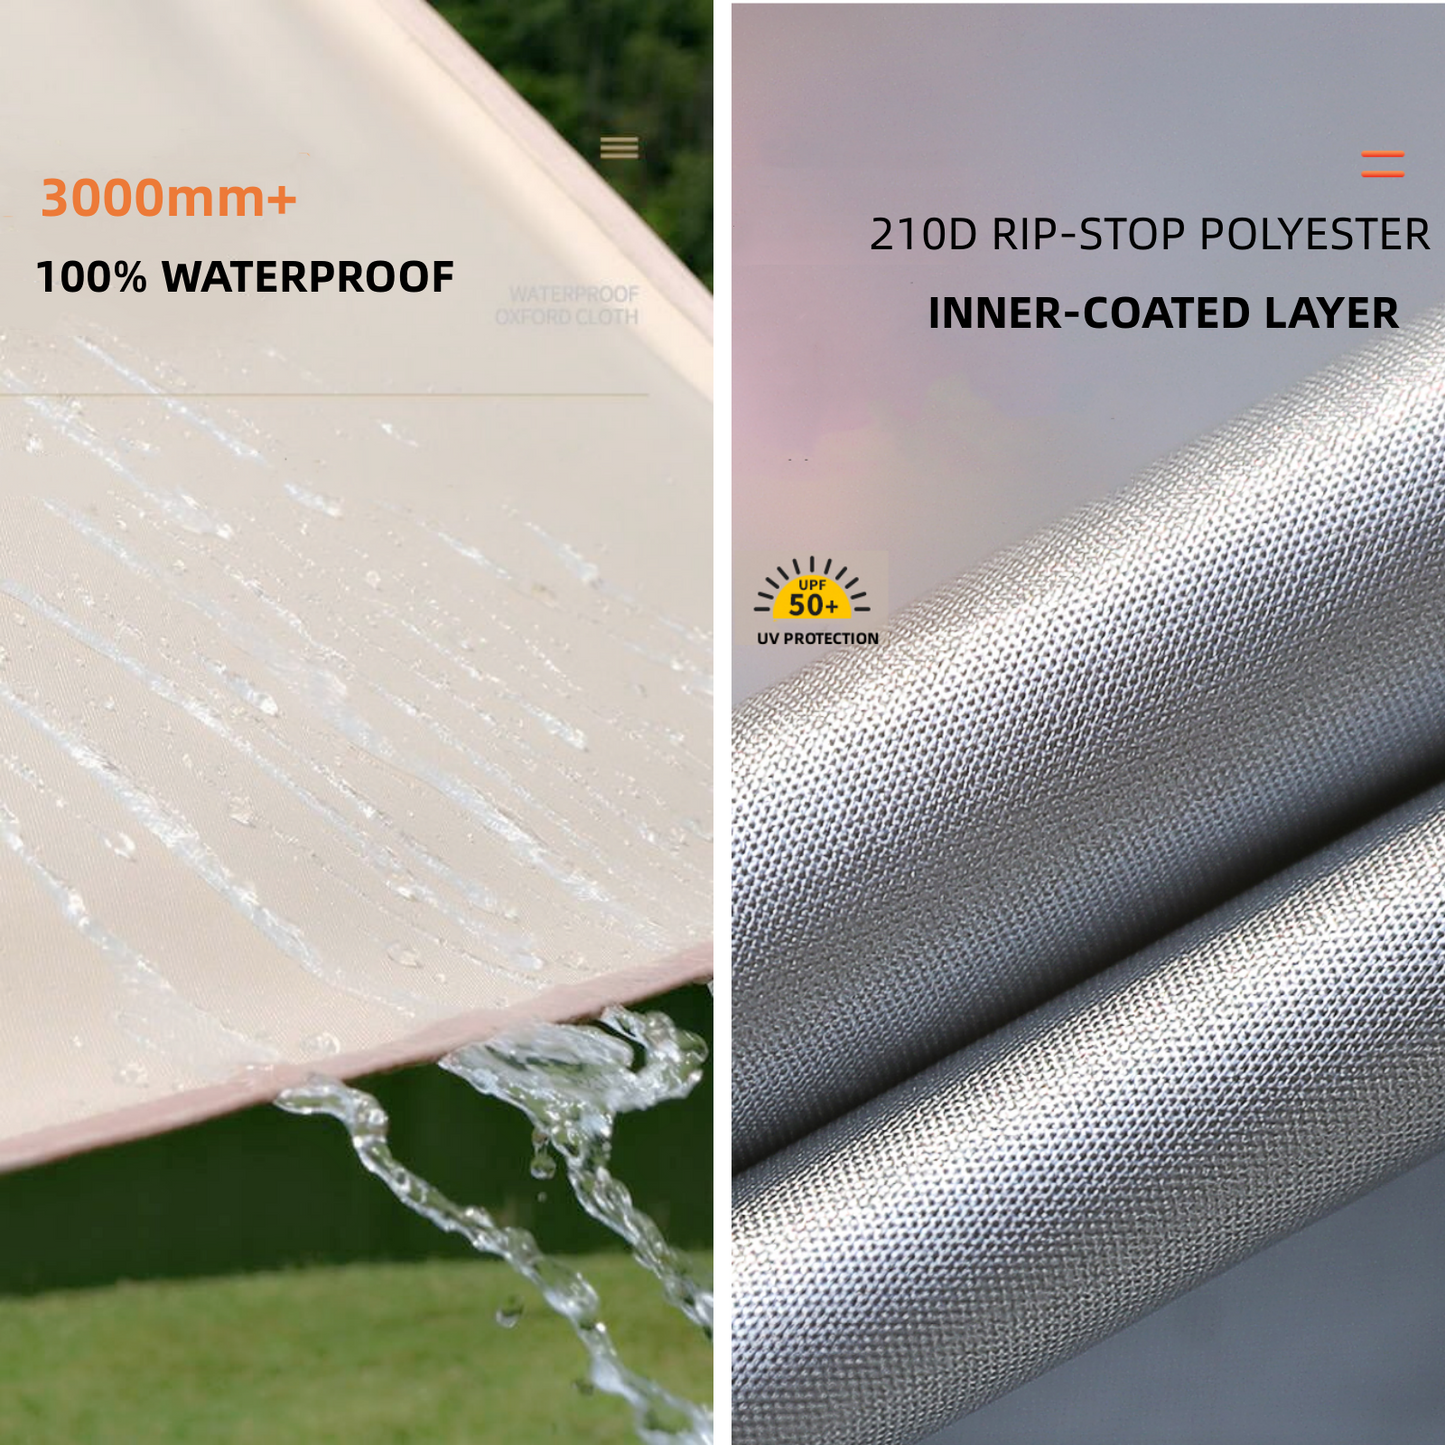 Exclusivo Mezcla Rain Fly Camping Tarp 3000mm+ Ultra Waterproof Resistant Sun Shade Lightweight Hammock Tent Tarp with Multifunctional Camping Accessories (10X10 ft Grey)